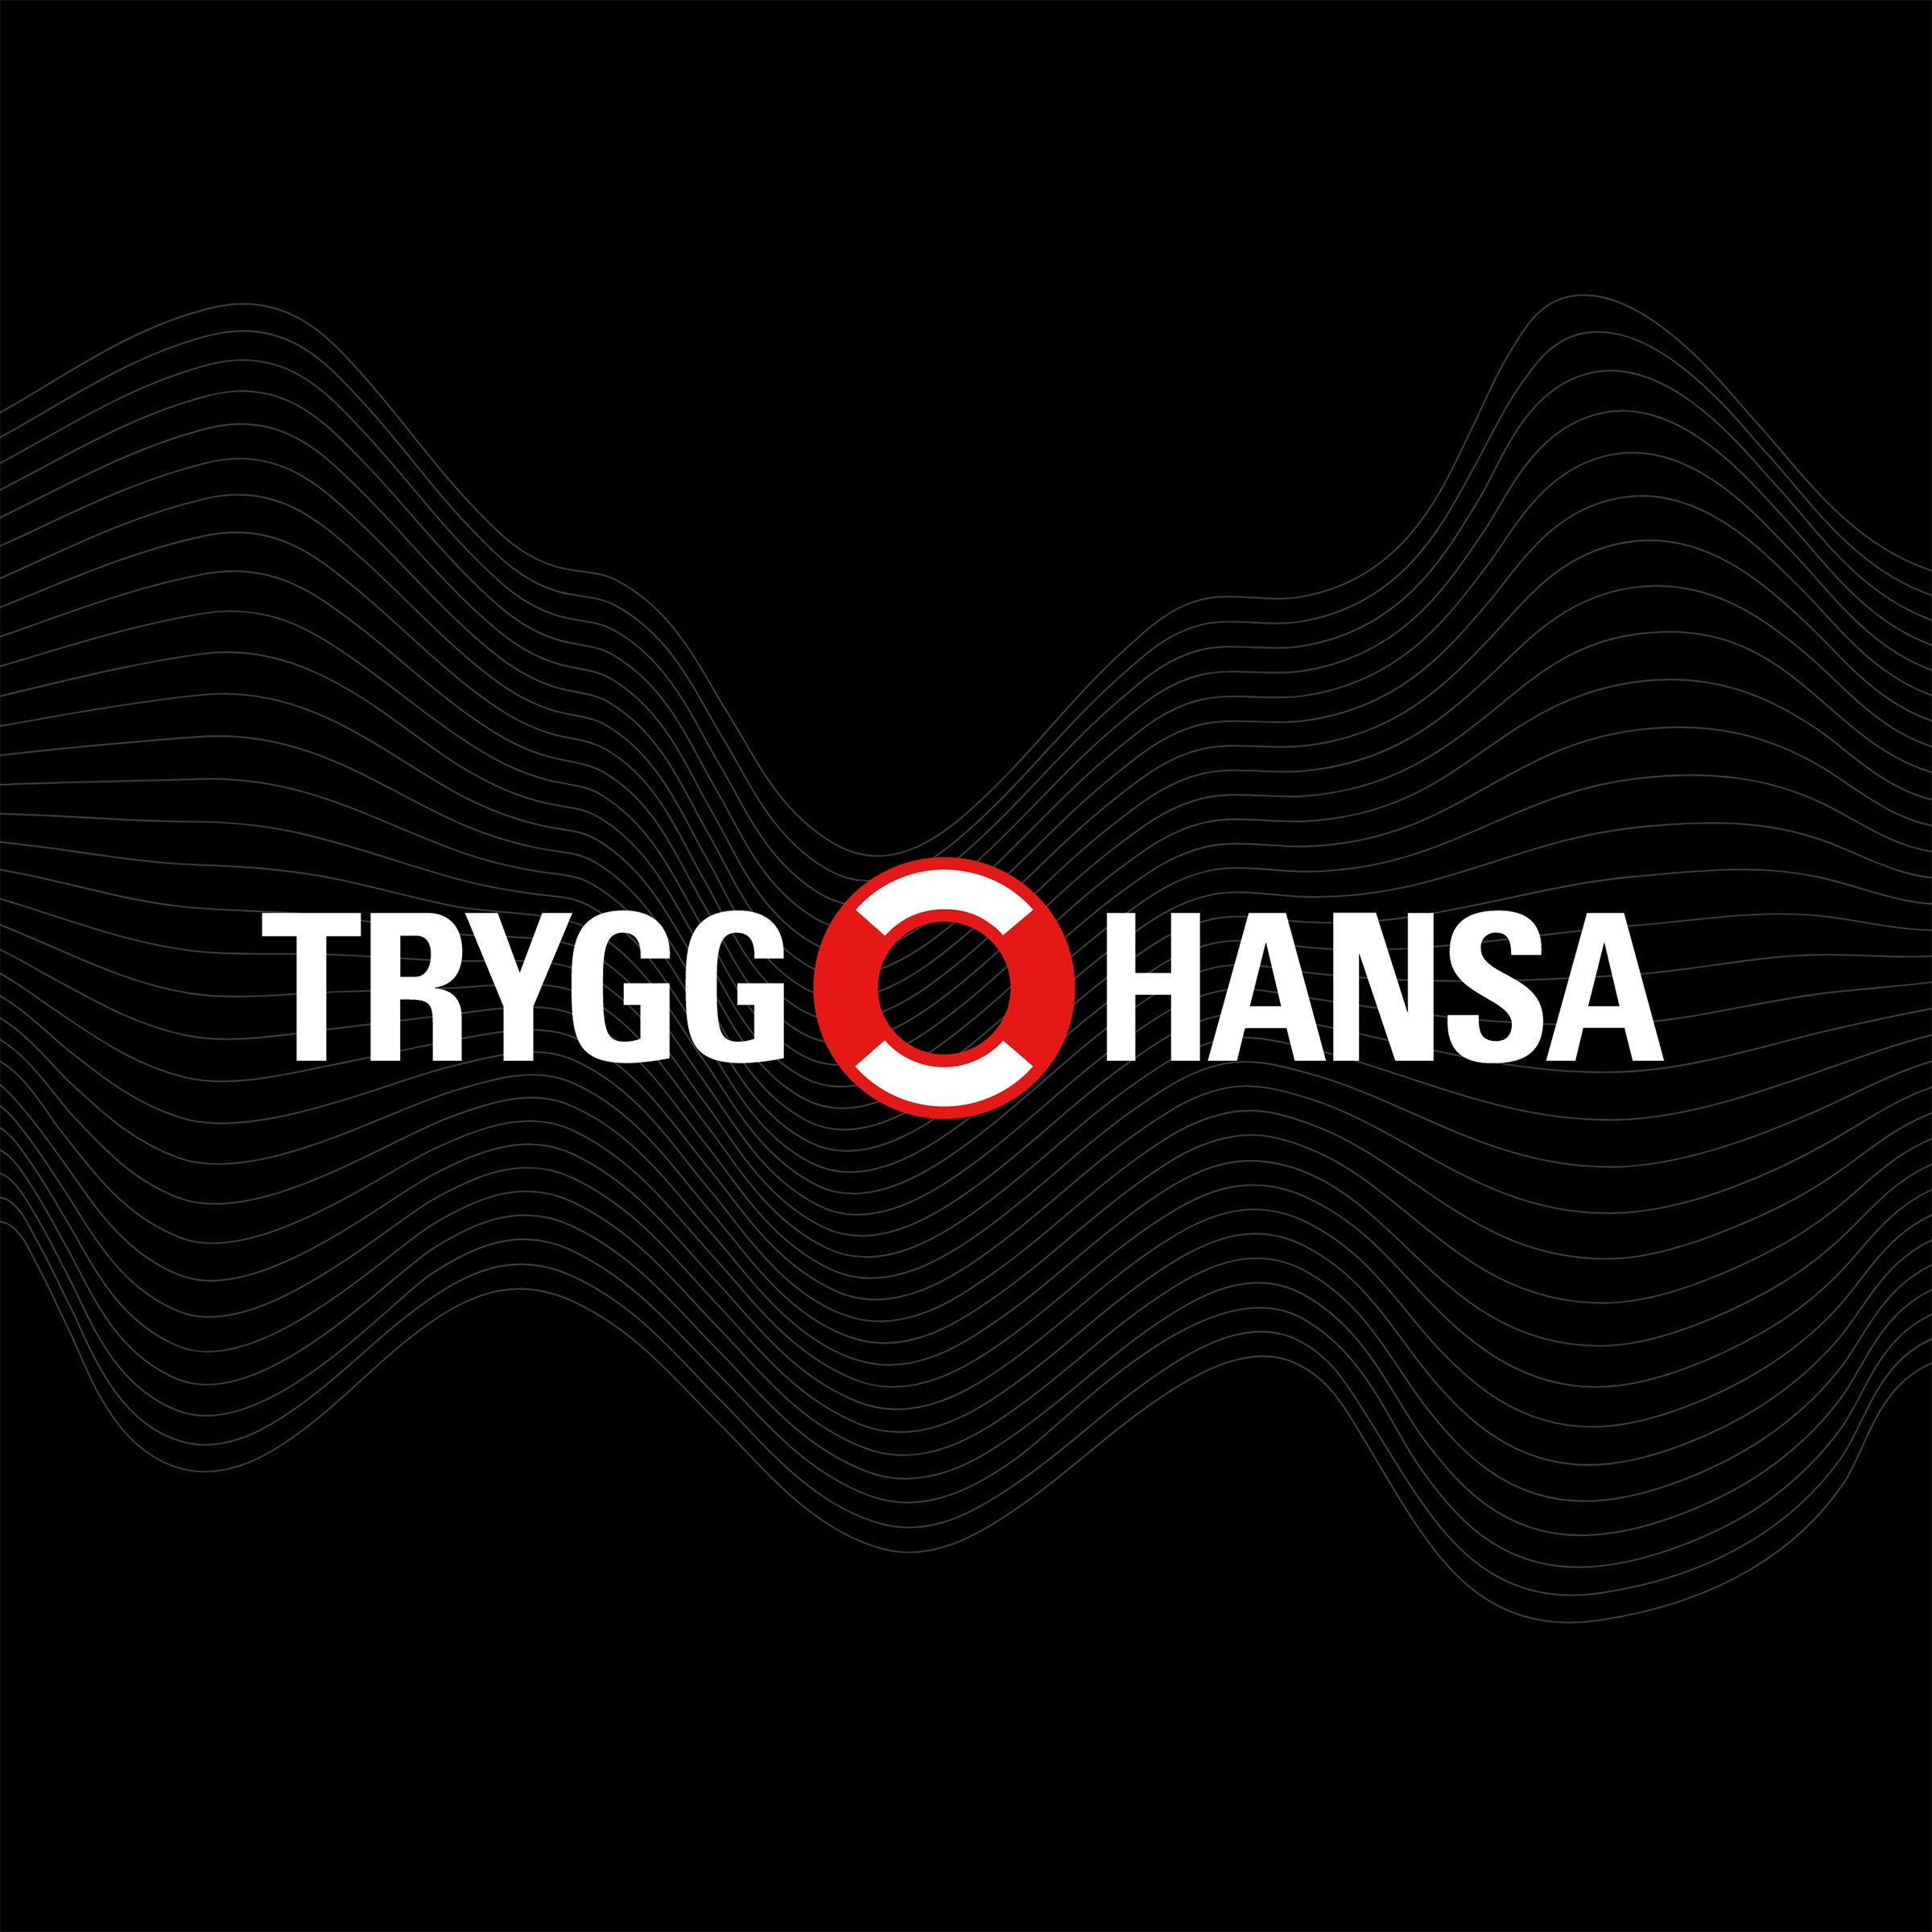 trygghansa_logo